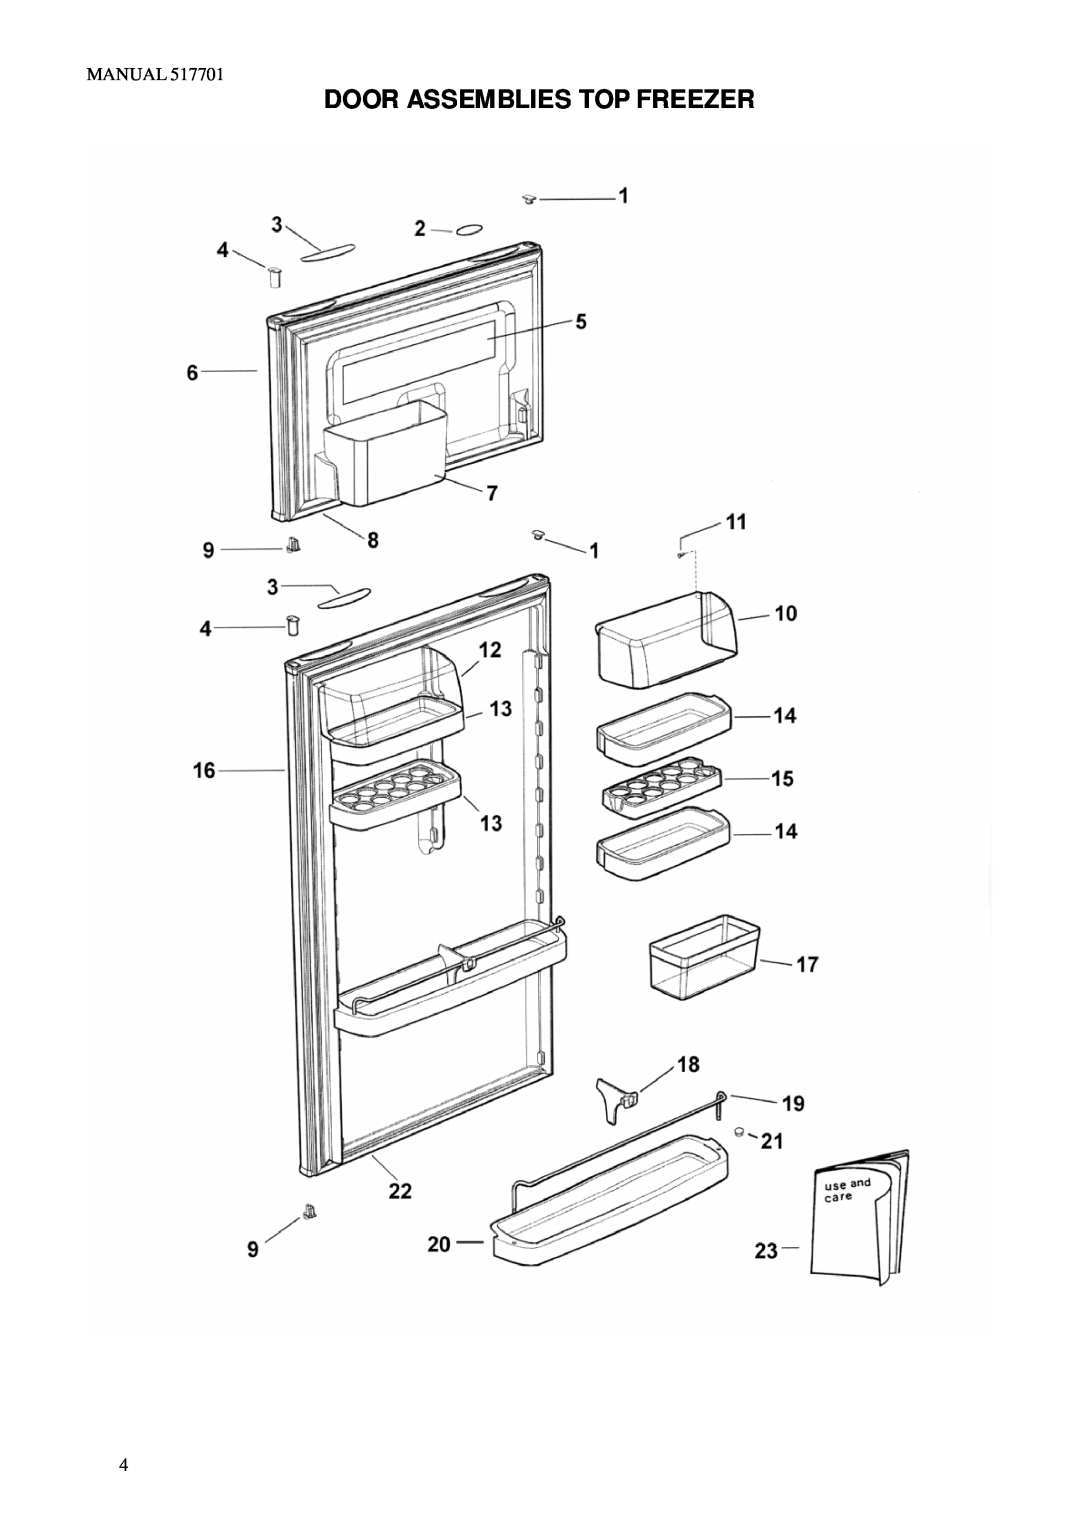 LG Electronics E440T, E442B, E16B, E16T manual Door Assemblies Top Freezer, Manual 